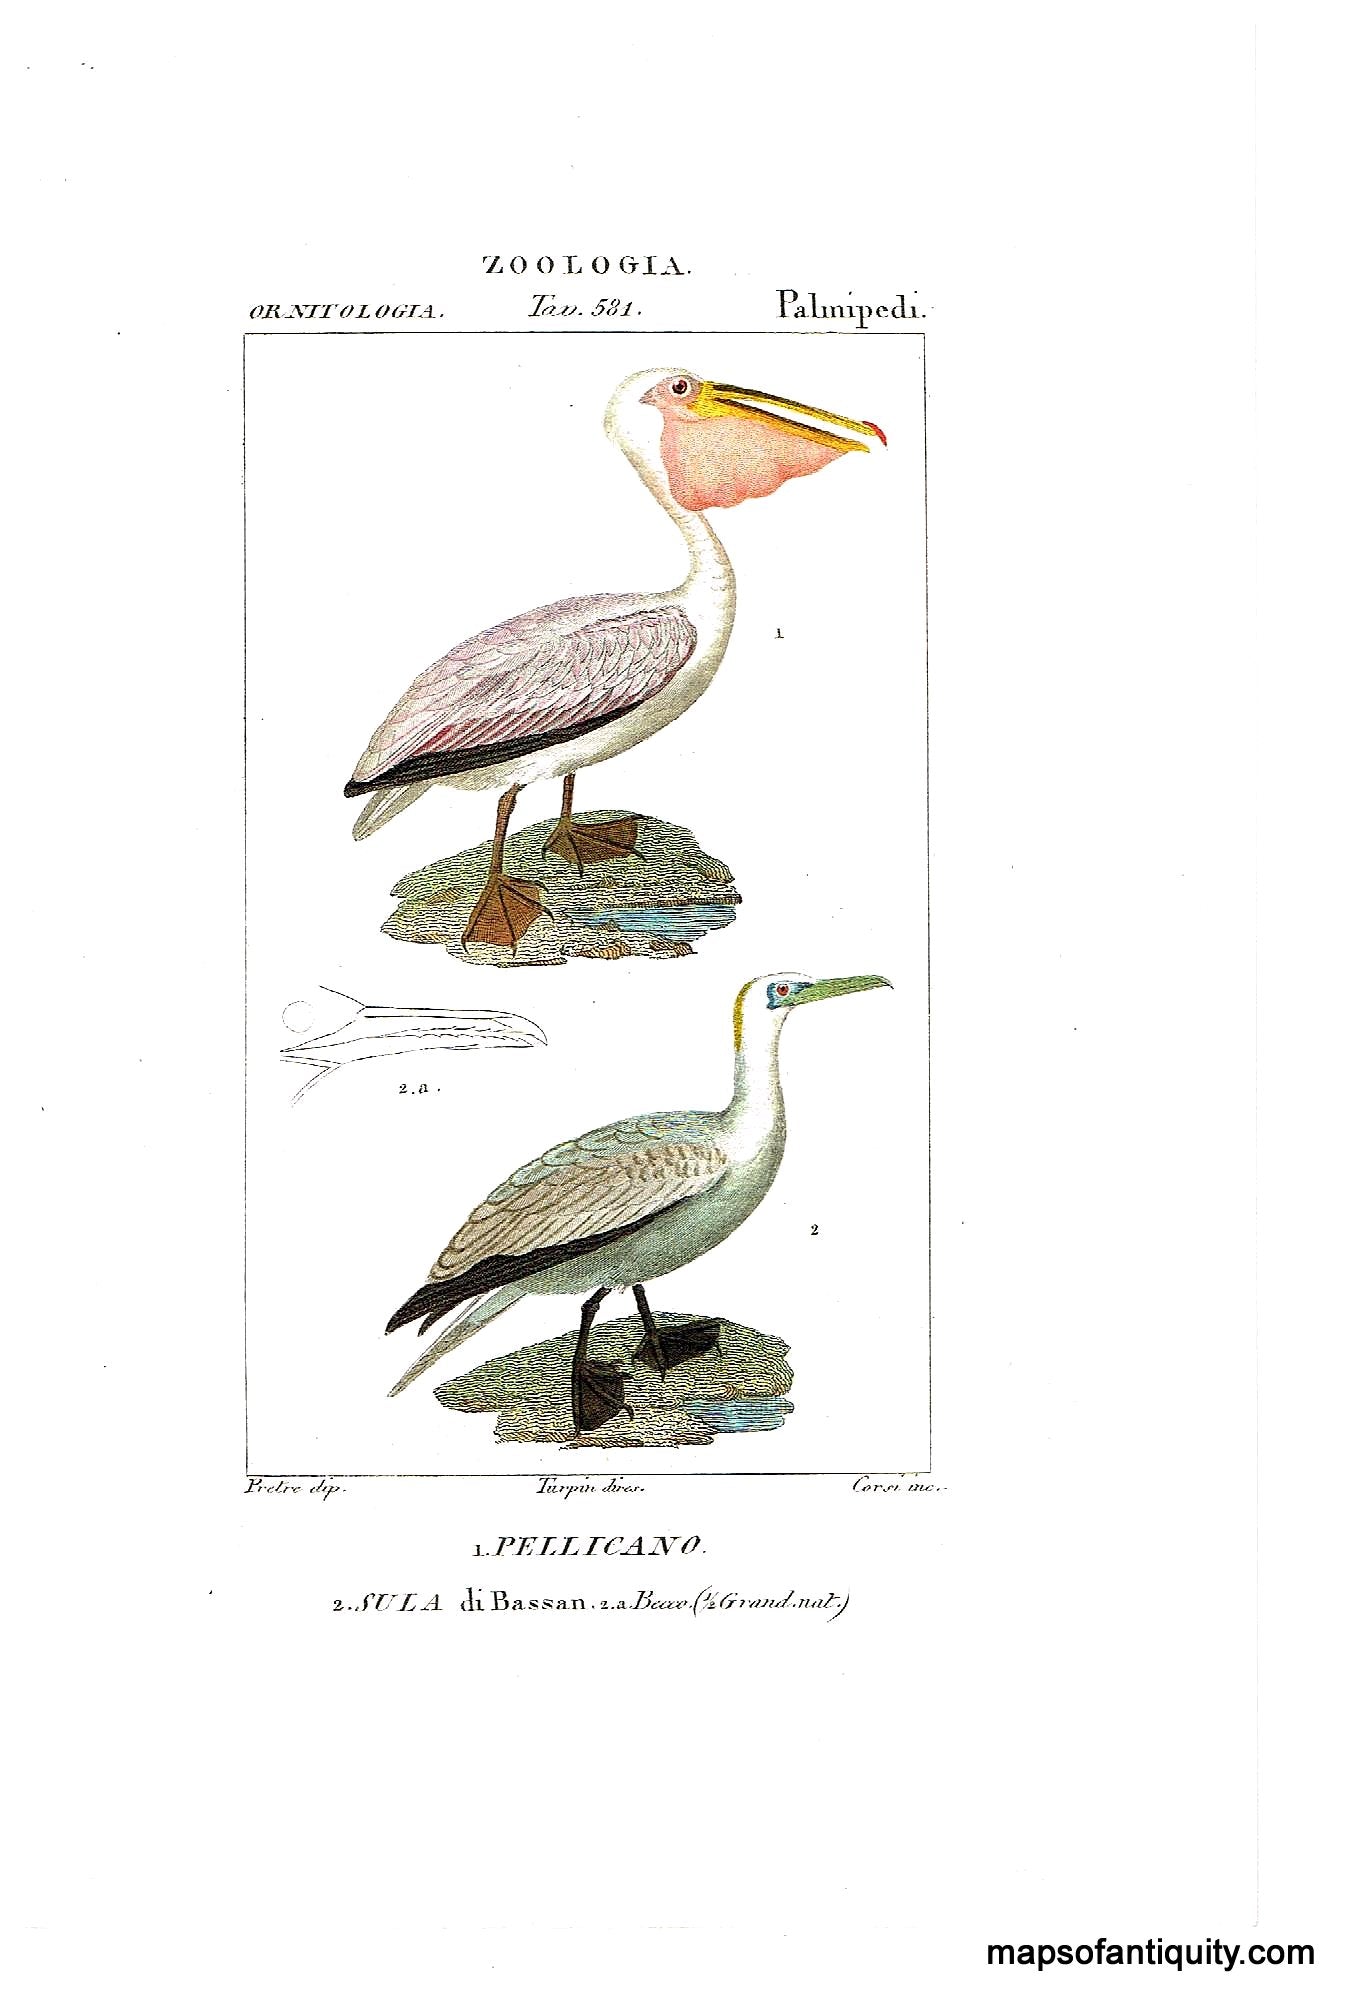 '-Pelican-Turpin-bird-**********-Natural-History-Birds---Maps-Of-Antiquity